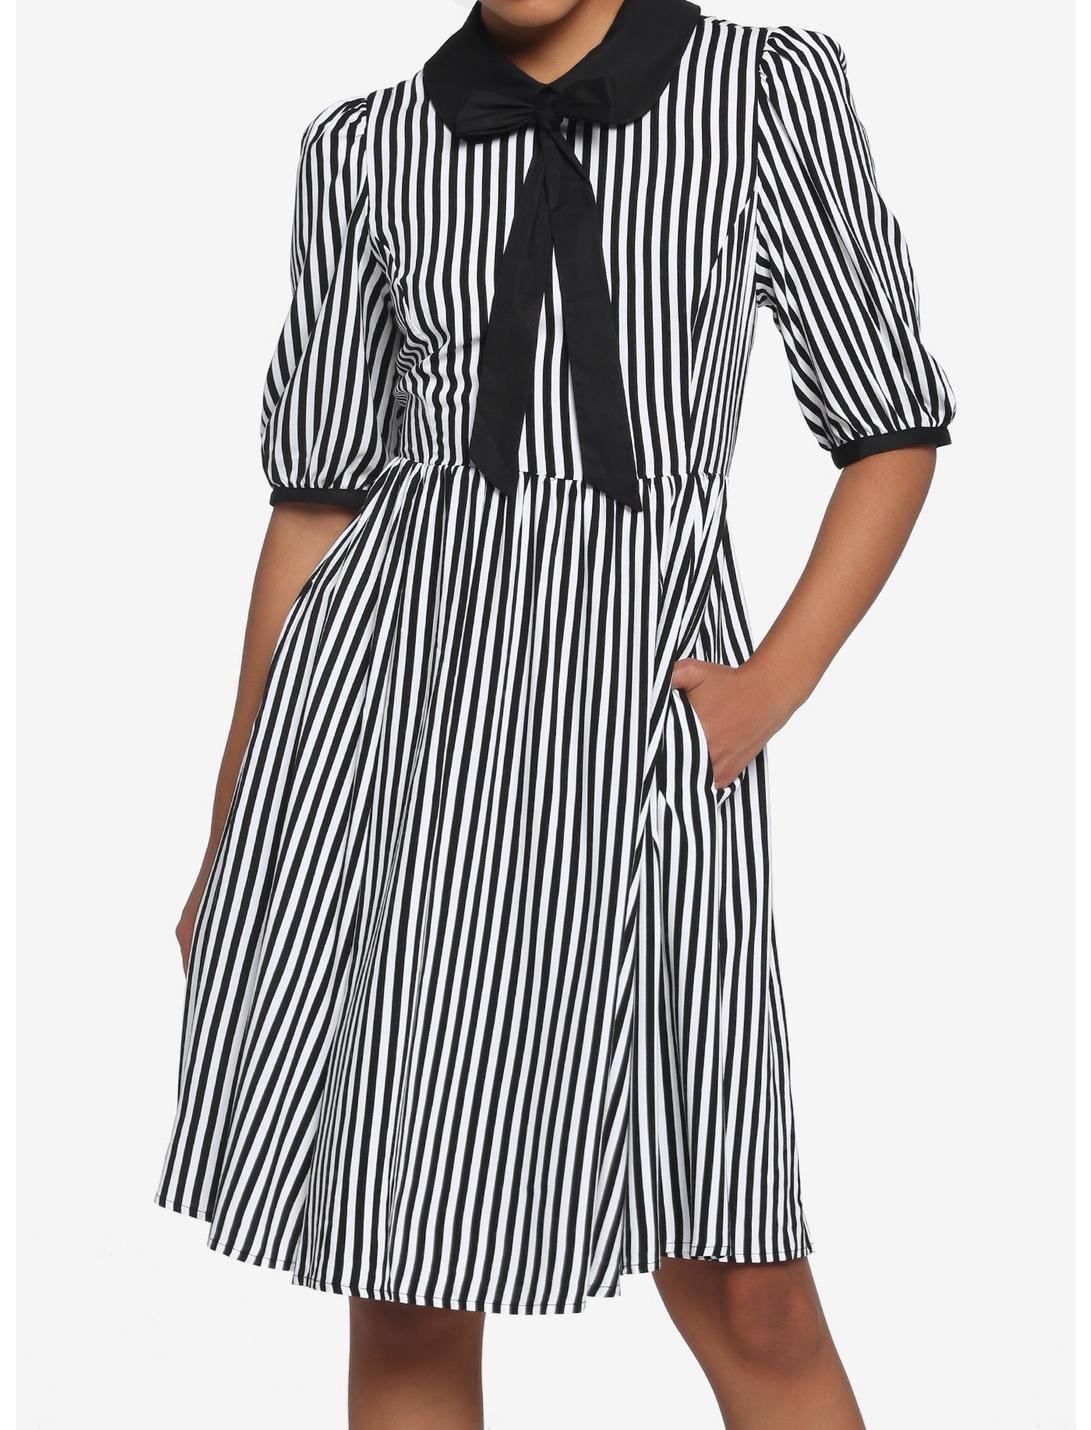 Black & White Stripe Bow Retro Dress, BLACK-WHITE STRIPE, hi-res